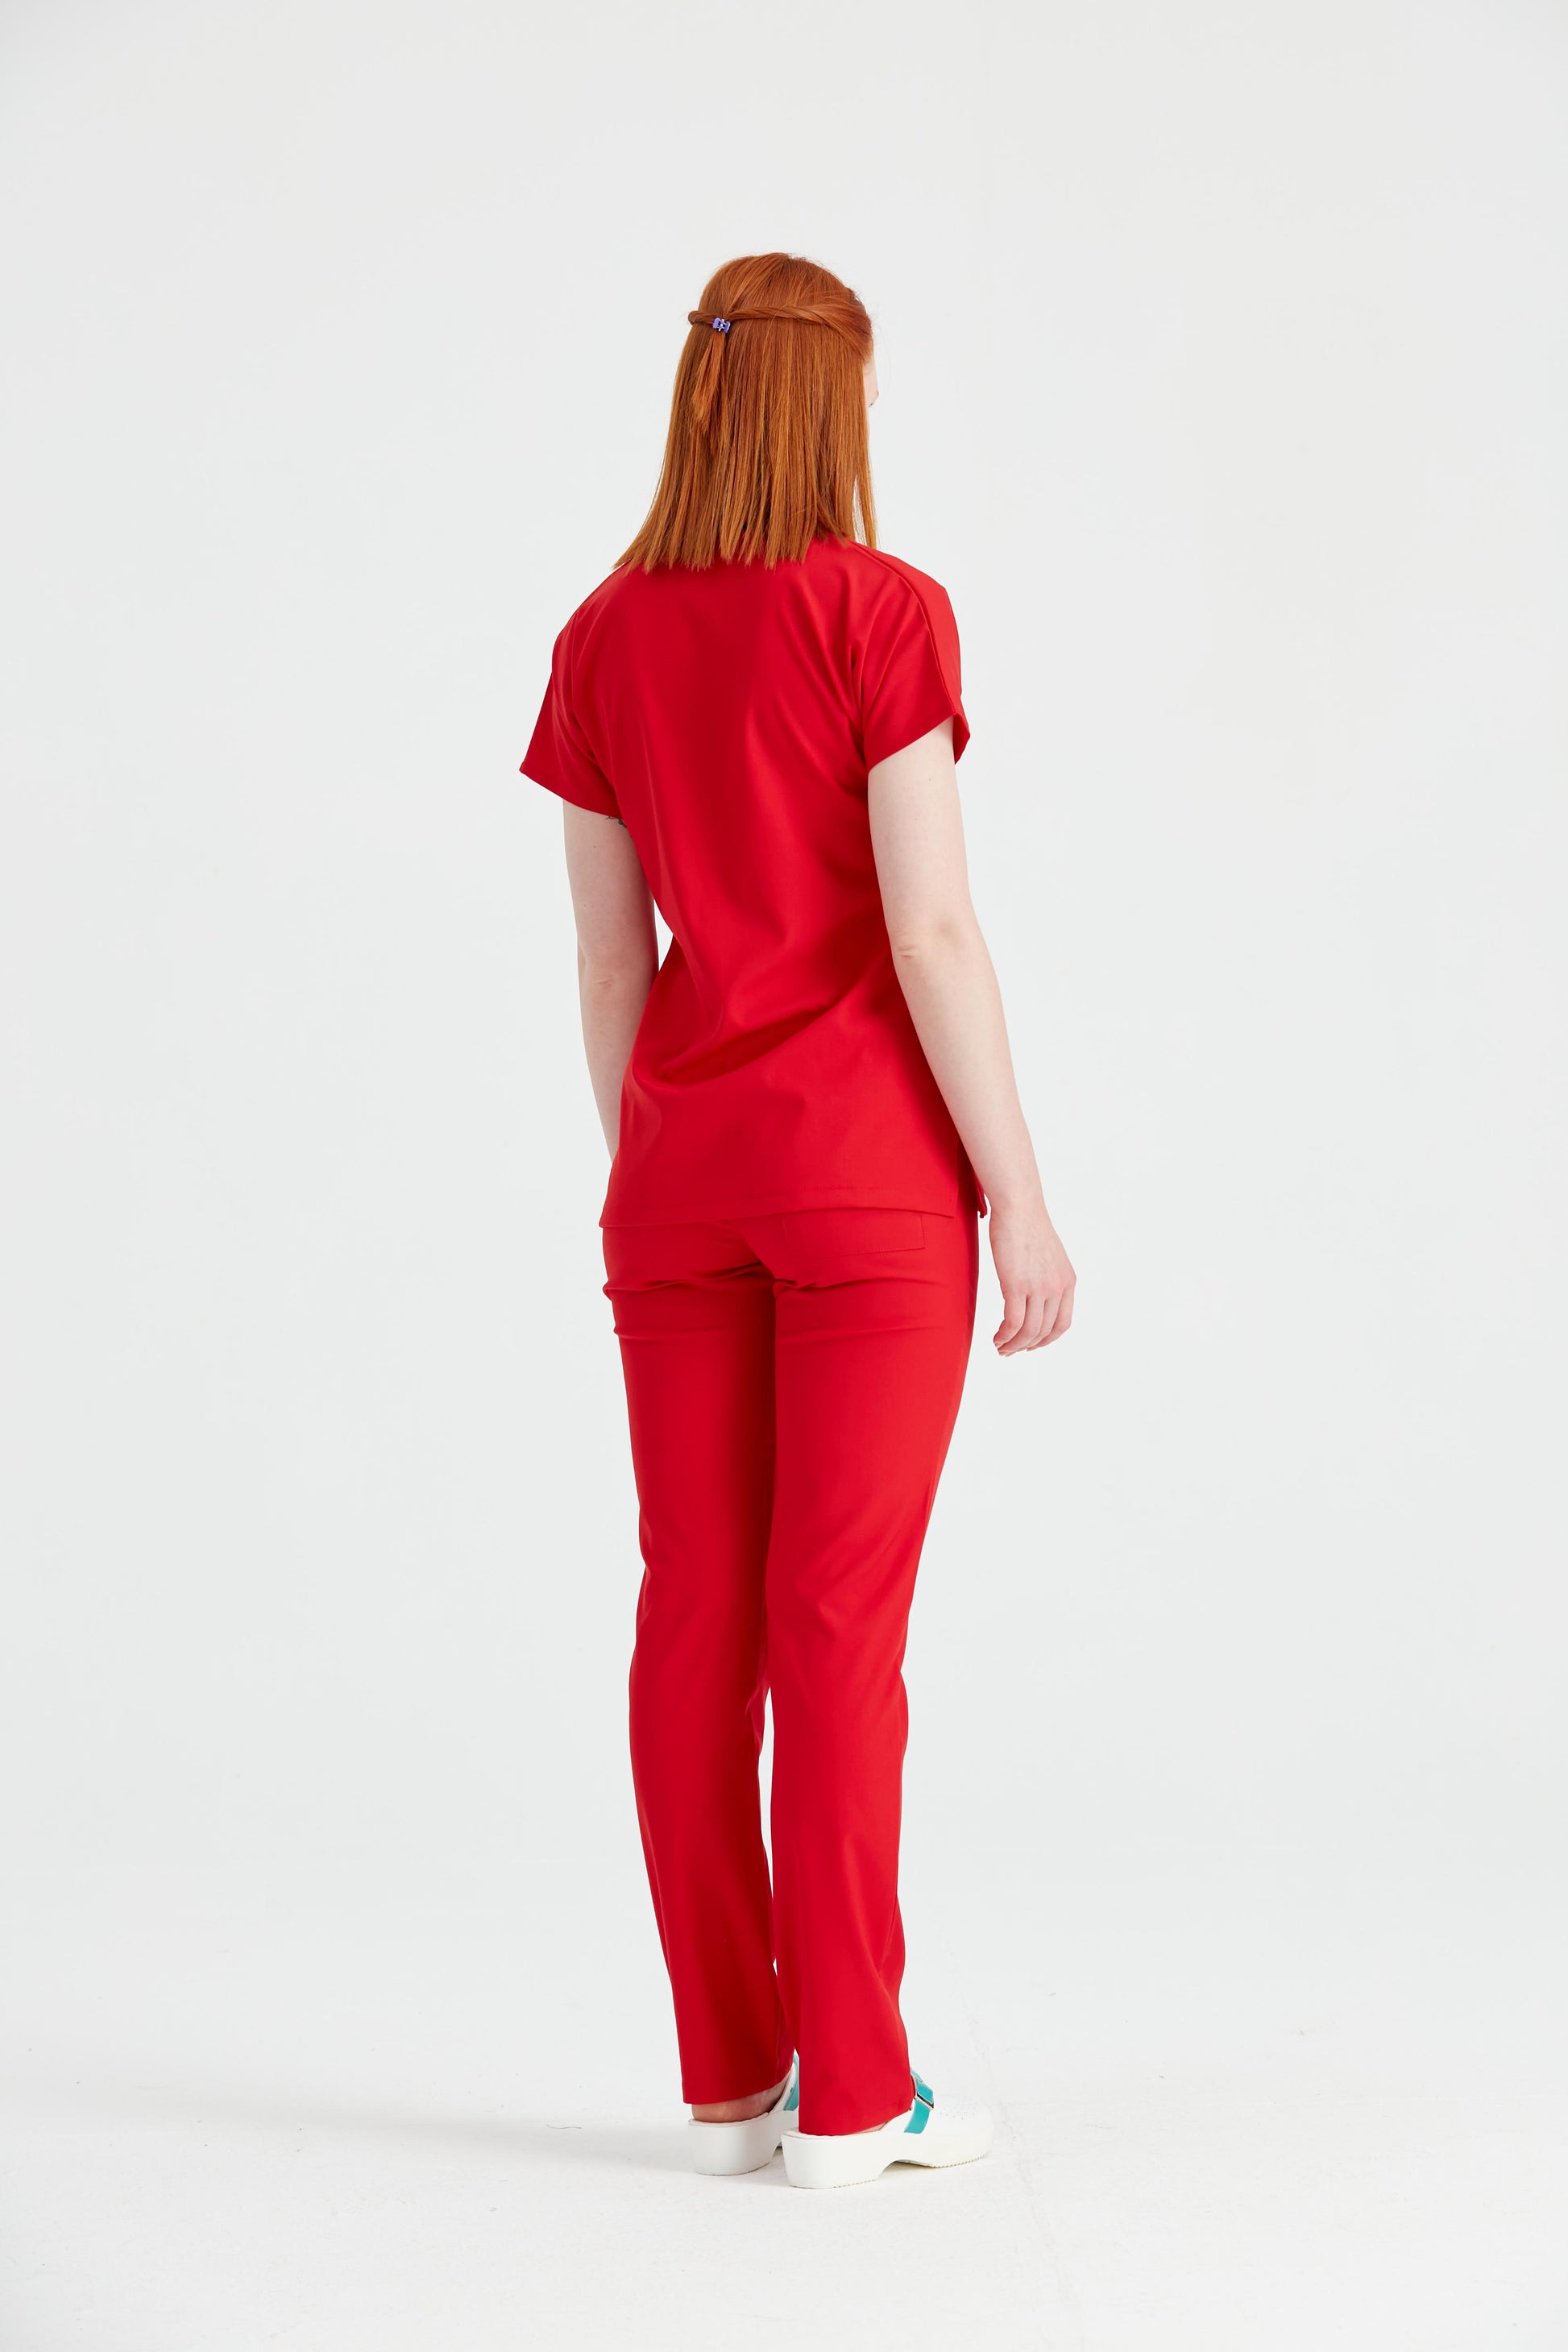 Asistenta medicala imbracata in costum medical de dama din elastan, rosu - red, vedere din spate